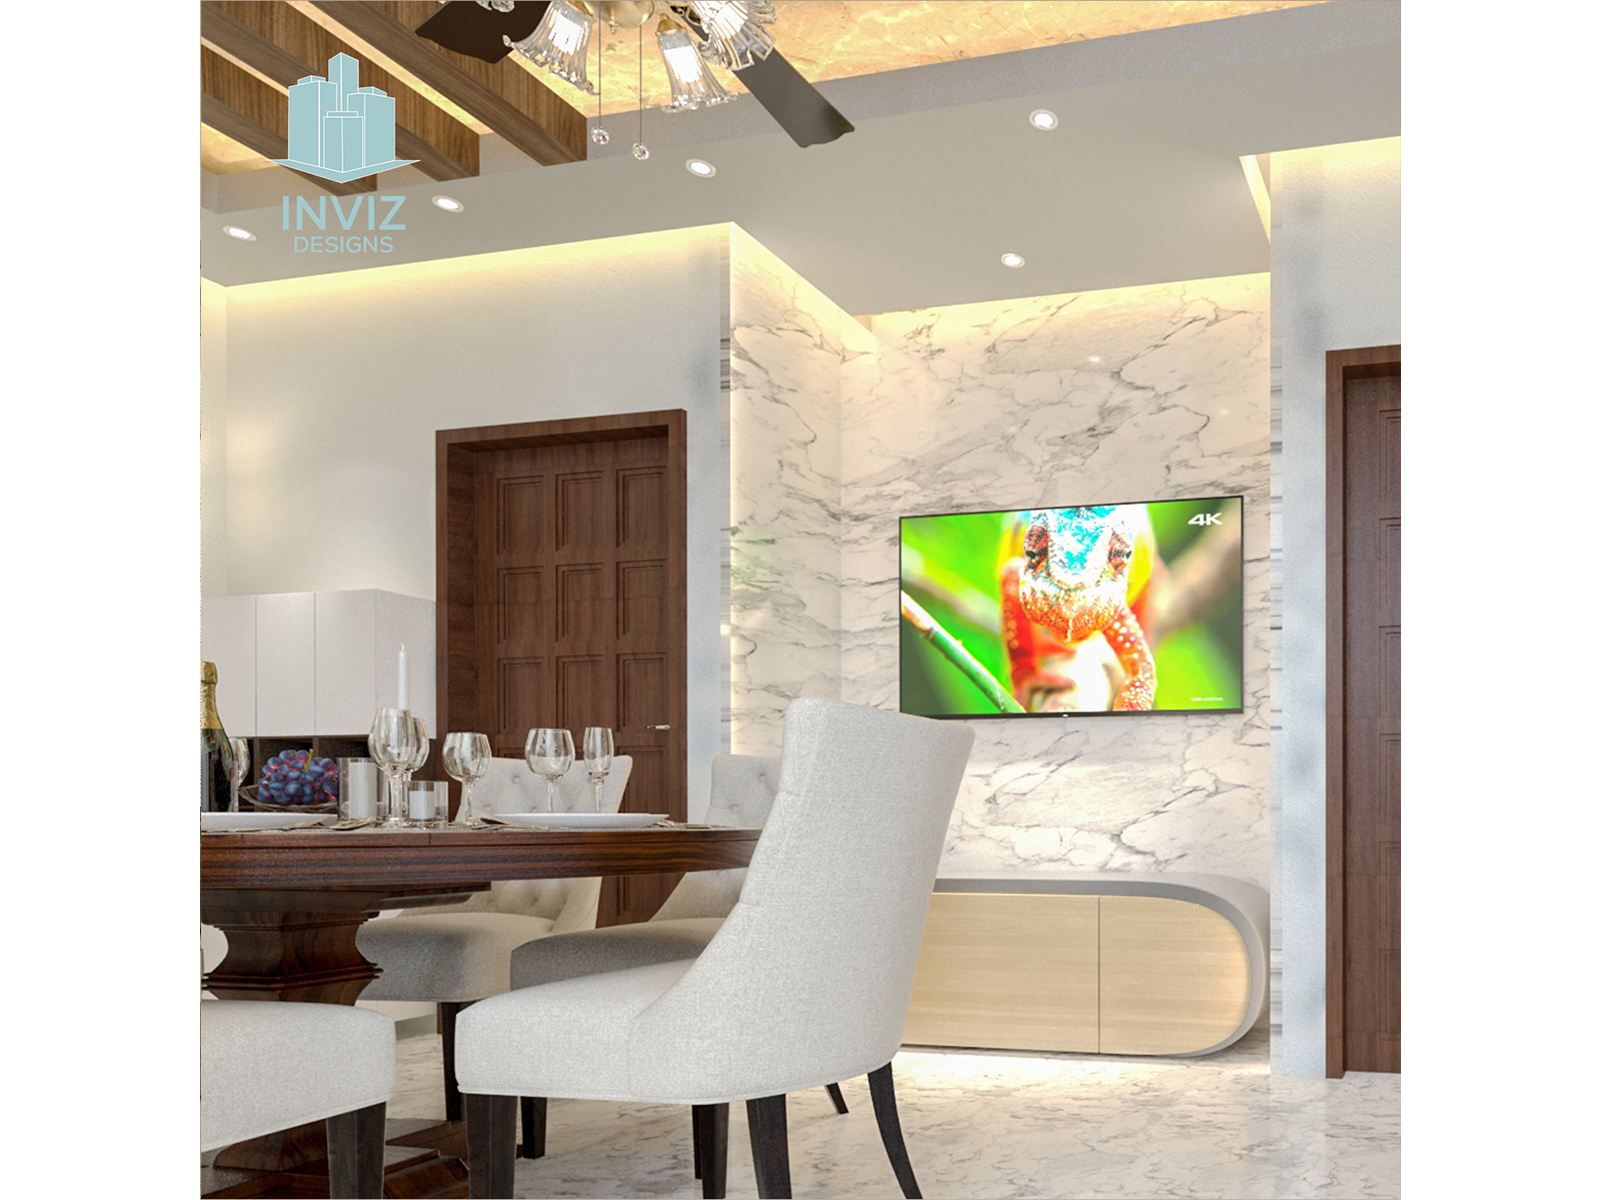 Living Room Design by Inviz Designs on Dribbble